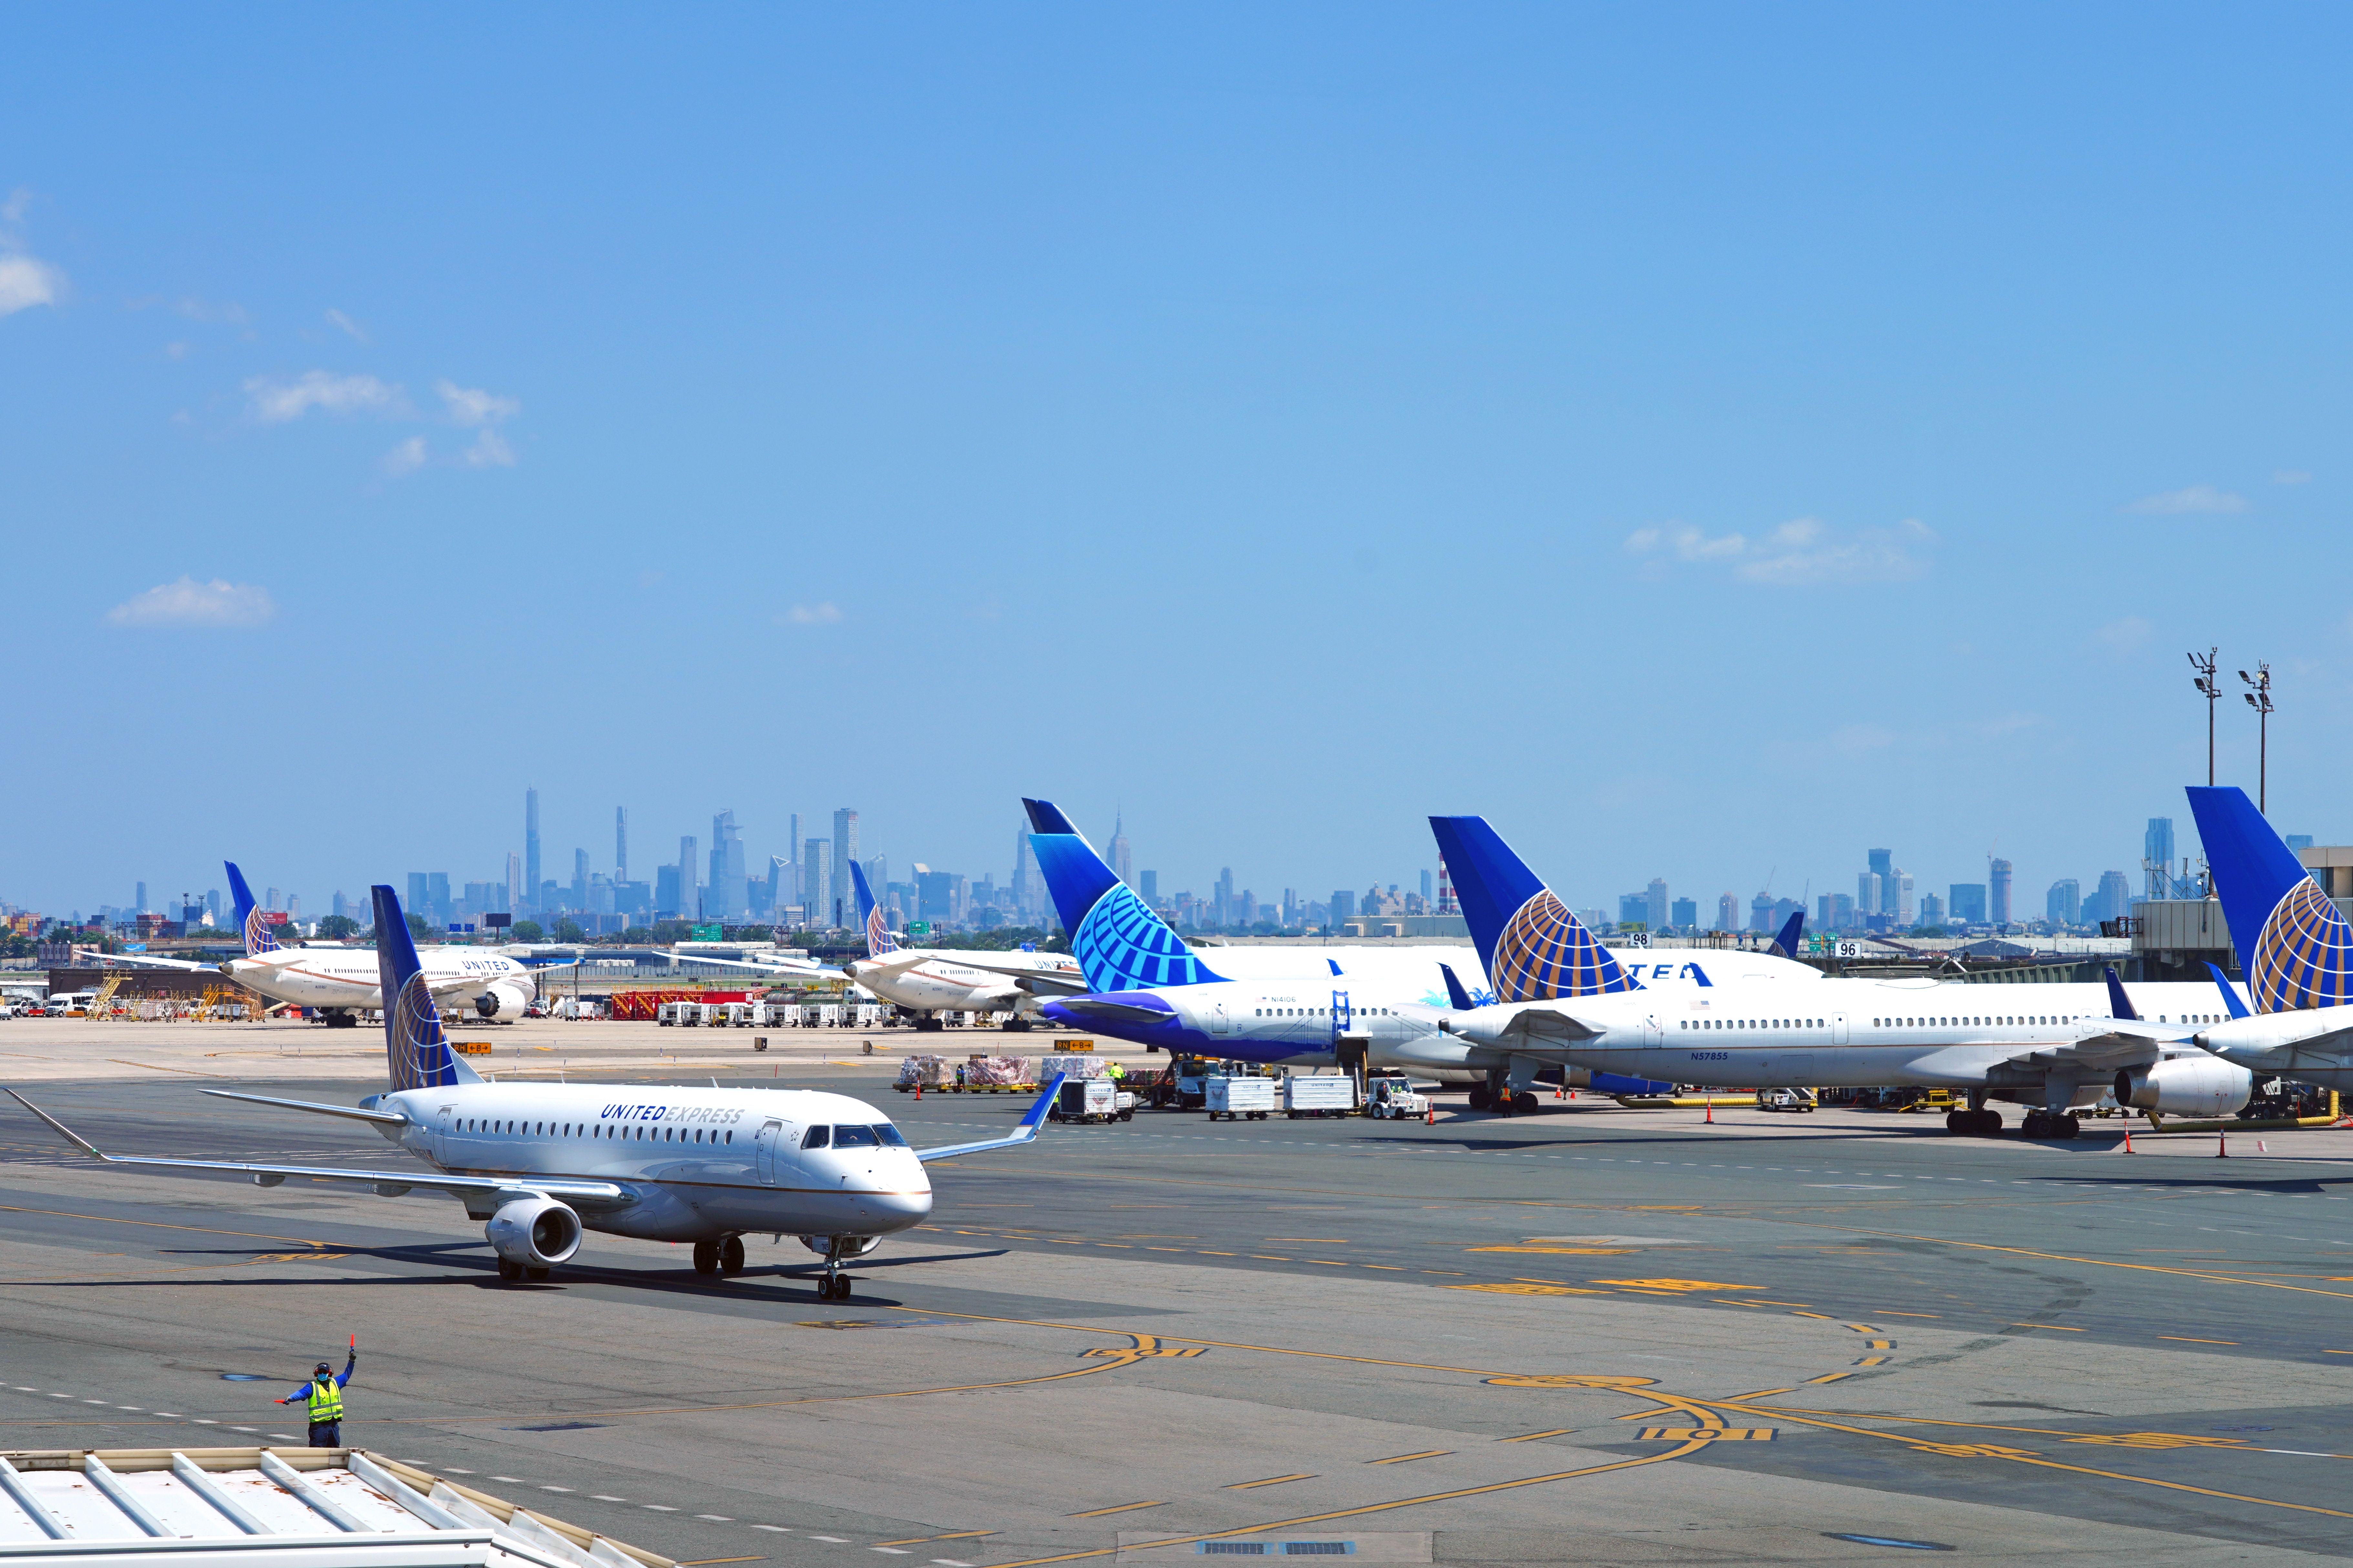 United Airlines aircraft at Newark Liberty International Airport.